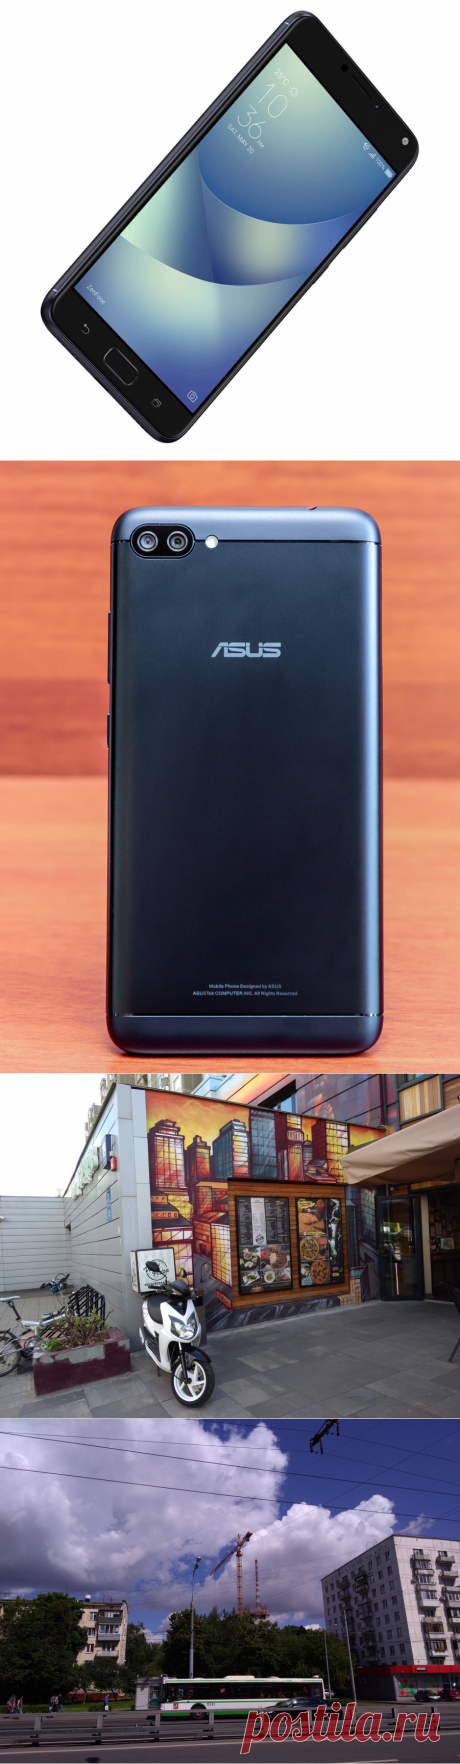 Обзор смартфона ASUS ZenFone 4 Max / Блог компании ASUS Russia / Geektimes